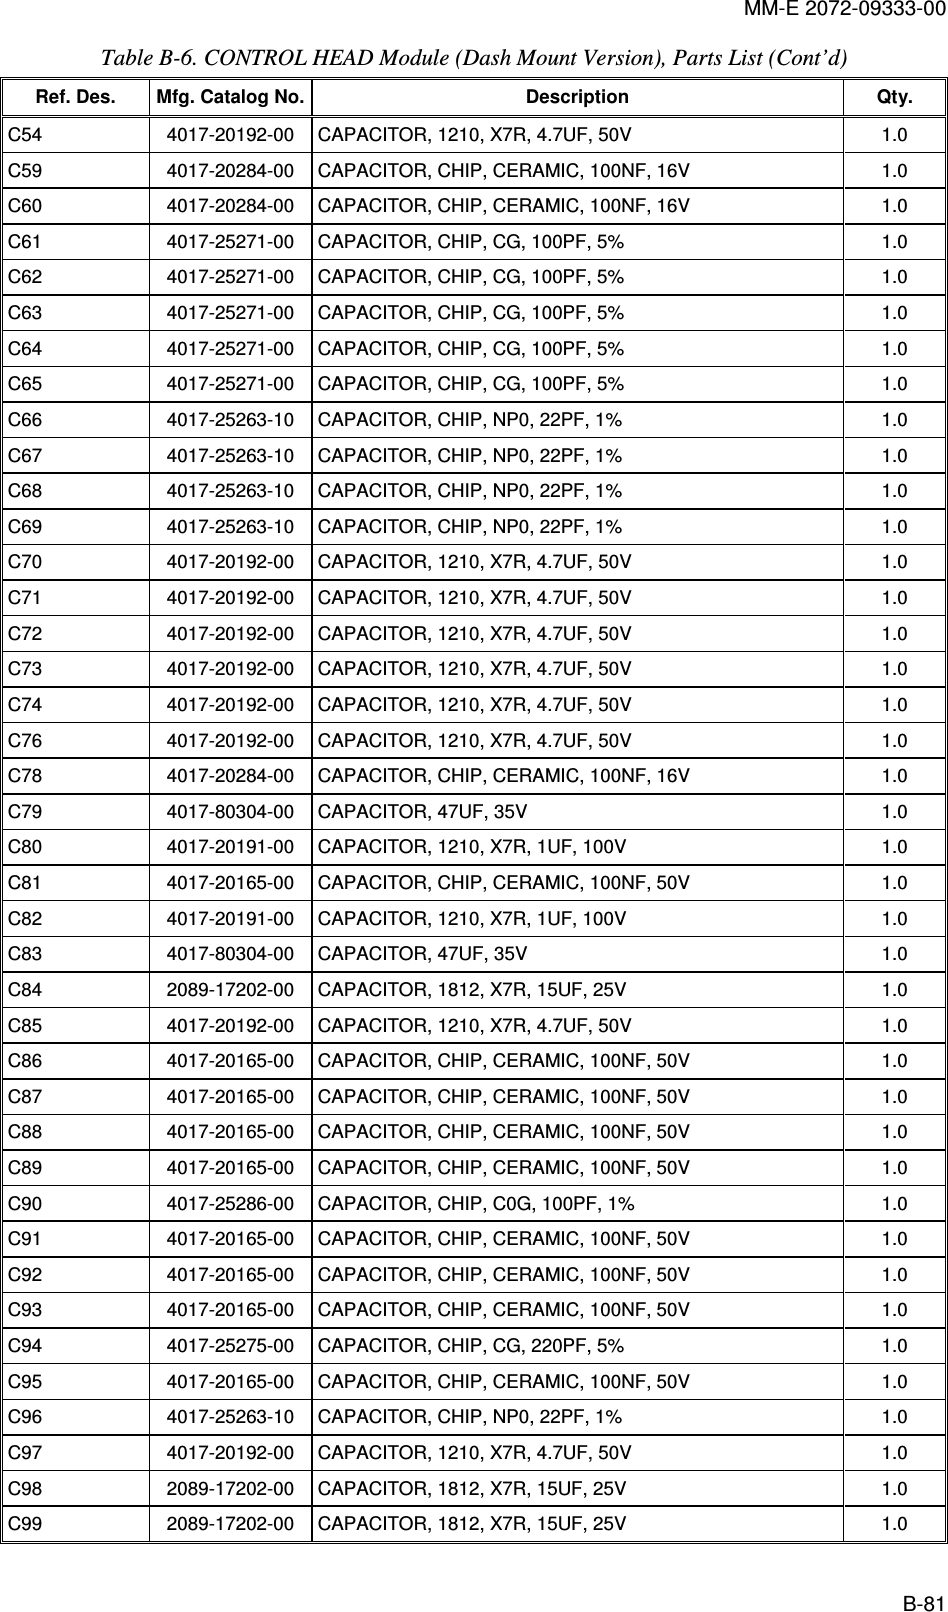 MM-E 2072-09333-00 B-81 Table  B-6. CONTROL HEAD Module (Dash Mount Version), Parts List (Cont’d)  Ref. Des.  Mfg. Catalog No. Description  Qty. C54   4017-20192-00   CAPACITOR, 1210, X7R, 4.7UF, 50V  1.0  C59   4017-20284-00   CAPACITOR, CHIP, CERAMIC, 100NF, 16V  1.0  C60   4017-20284-00   CAPACITOR, CHIP, CERAMIC, 100NF, 16V  1.0  C61   4017-25271-00   CAPACITOR, CHIP, CG, 100PF, 5%  1.0  C62   4017-25271-00   CAPACITOR, CHIP, CG, 100PF, 5%  1.0  C63   4017-25271-00   CAPACITOR, CHIP, CG, 100PF, 5%  1.0  C64   4017-25271-00   CAPACITOR, CHIP, CG, 100PF, 5%  1.0  C65   4017-25271-00   CAPACITOR, CHIP, CG, 100PF, 5%  1.0  C66   4017-25263-10   CAPACITOR, CHIP, NP0, 22PF, 1%  1.0  C67   4017-25263-10   CAPACITOR, CHIP, NP0, 22PF, 1%  1.0  C68   4017-25263-10   CAPACITOR, CHIP, NP0, 22PF, 1%  1.0  C69   4017-25263-10   CAPACITOR, CHIP, NP0, 22PF, 1%  1.0  C70   4017-20192-00   CAPACITOR, 1210, X7R, 4.7UF, 50V  1.0  C71   4017-20192-00   CAPACITOR, 1210, X7R, 4.7UF, 50V  1.0  C72   4017-20192-00   CAPACITOR, 1210, X7R, 4.7UF, 50V  1.0  C73   4017-20192-00   CAPACITOR, 1210, X7R, 4.7UF, 50V  1.0  C74   4017-20192-00   CAPACITOR, 1210, X7R, 4.7UF, 50V  1.0  C76   4017-20192-00   CAPACITOR, 1210, X7R, 4.7UF, 50V  1.0  C78   4017-20284-00   CAPACITOR, CHIP, CERAMIC, 100NF, 16V  1.0  C79   4017-80304-00   CAPACITOR, 47UF, 35V  1.0  C80   4017-20191-00   CAPACITOR, 1210, X7R, 1UF, 100V  1.0  C81   4017-20165-00   CAPACITOR, CHIP, CERAMIC, 100NF, 50V  1.0  C82   4017-20191-00   CAPACITOR, 1210, X7R, 1UF, 100V  1.0  C83   4017-80304-00   CAPACITOR, 47UF, 35V  1.0  C84   2089-17202-00   CAPACITOR, 1812, X7R, 15UF, 25V  1.0  C85   4017-20192-00   CAPACITOR, 1210, X7R, 4.7UF, 50V  1.0  C86   4017-20165-00   CAPACITOR, CHIP, CERAMIC, 100NF, 50V  1.0  C87   4017-20165-00   CAPACITOR, CHIP, CERAMIC, 100NF, 50V  1.0  C88   4017-20165-00   CAPACITOR, CHIP, CERAMIC, 100NF, 50V  1.0  C89   4017-20165-00   CAPACITOR, CHIP, CERAMIC, 100NF, 50V  1.0  C90   4017-25286-00   CAPACITOR, CHIP, C0G, 100PF, 1%  1.0  C91   4017-20165-00   CAPACITOR, CHIP, CERAMIC, 100NF, 50V  1.0  C92   4017-20165-00   CAPACITOR, CHIP, CERAMIC, 100NF, 50V  1.0  C93   4017-20165-00   CAPACITOR, CHIP, CERAMIC, 100NF, 50V  1.0  C94   4017-25275-00   CAPACITOR, CHIP, CG, 220PF, 5%  1.0  C95   4017-20165-00   CAPACITOR, CHIP, CERAMIC, 100NF, 50V  1.0  C96   4017-25263-10   CAPACITOR, CHIP, NP0, 22PF, 1%  1.0  C97   4017-20192-00   CAPACITOR, 1210, X7R, 4.7UF, 50V  1.0  C98   2089-17202-00   CAPACITOR, 1812, X7R, 15UF, 25V  1.0  C99   2089-17202-00   CAPACITOR, 1812, X7R, 15UF, 25V  1.0  